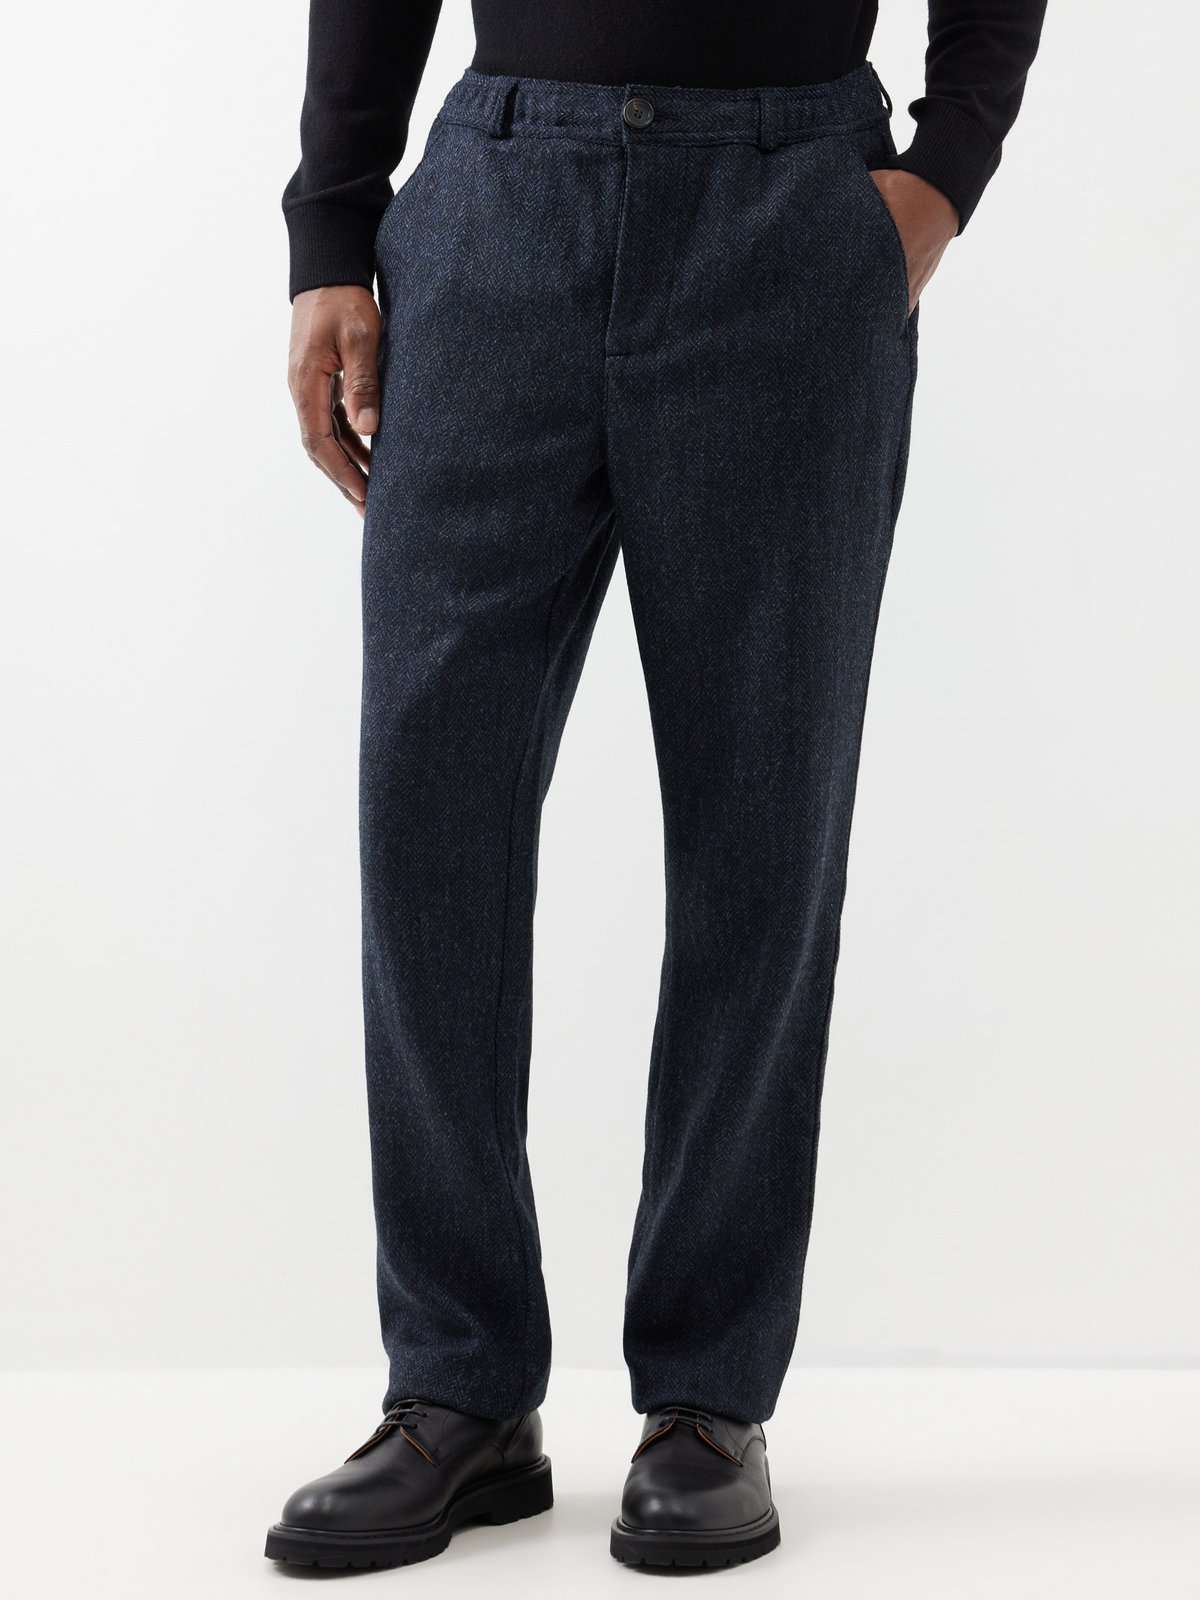 Костюмные брюки Amersham с узором «елочка» из шерсти